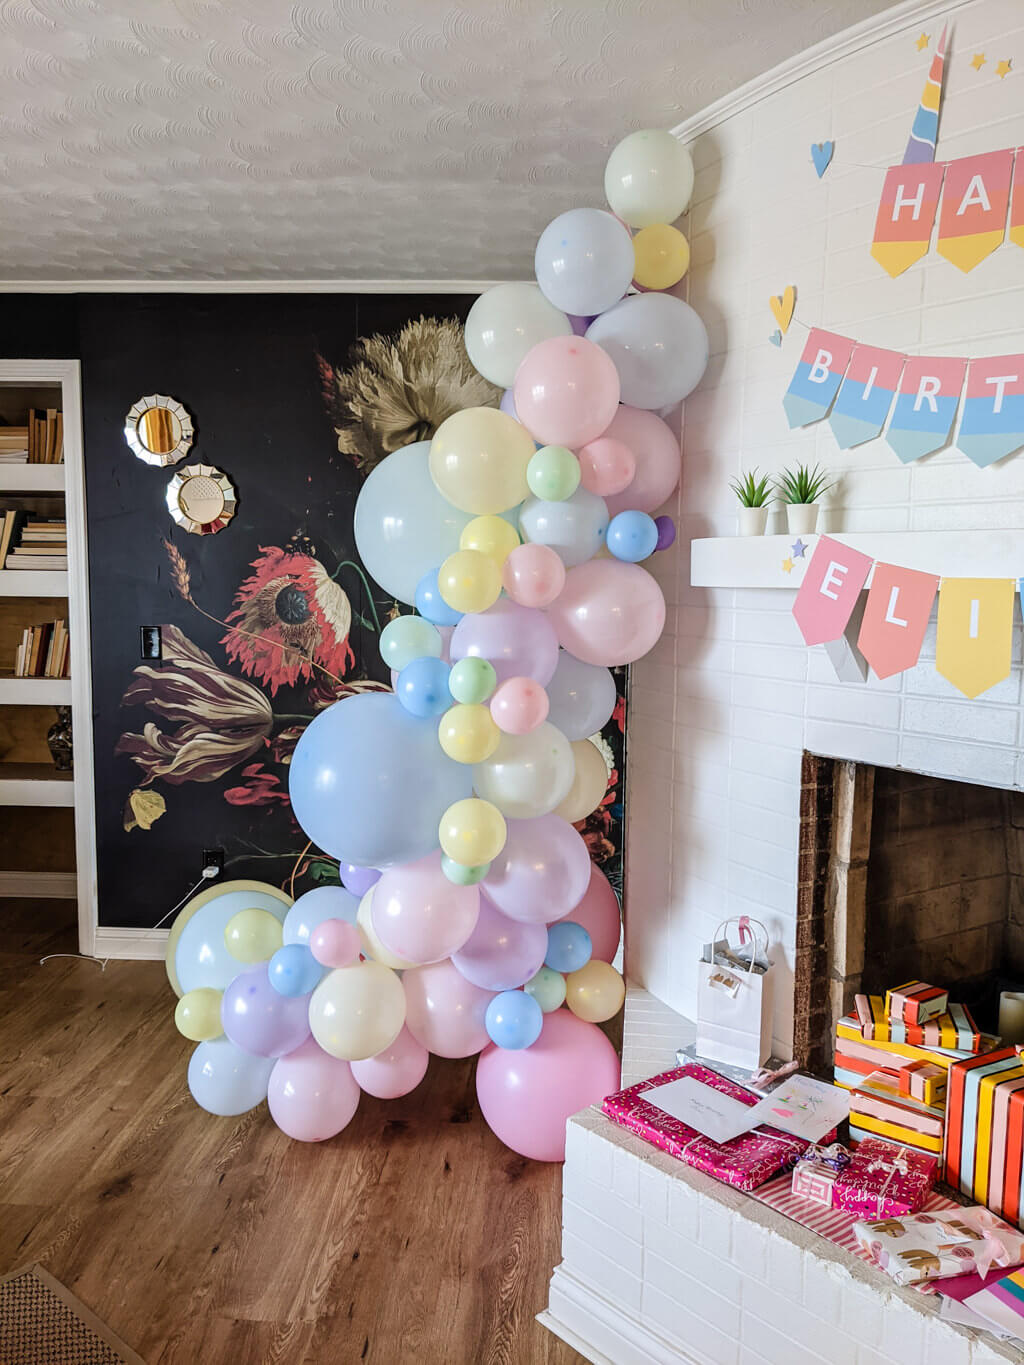 Balloon garland on a wall birthday party decor